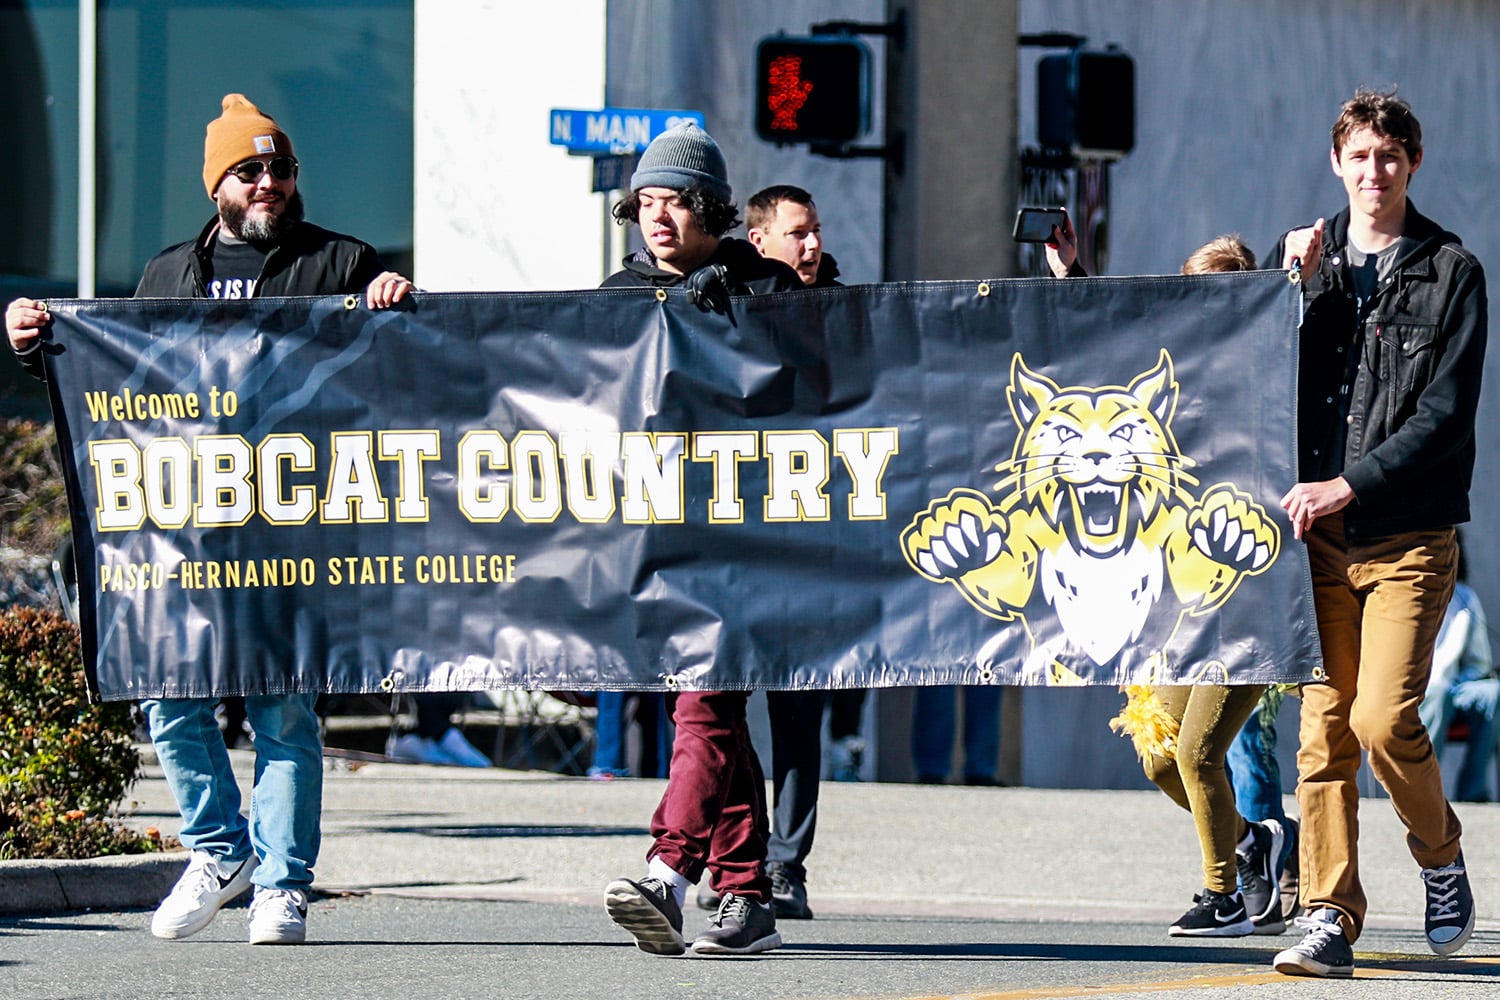 Bobcat Country Pasco-Hernando State College. Photo by Cheryl Clanton